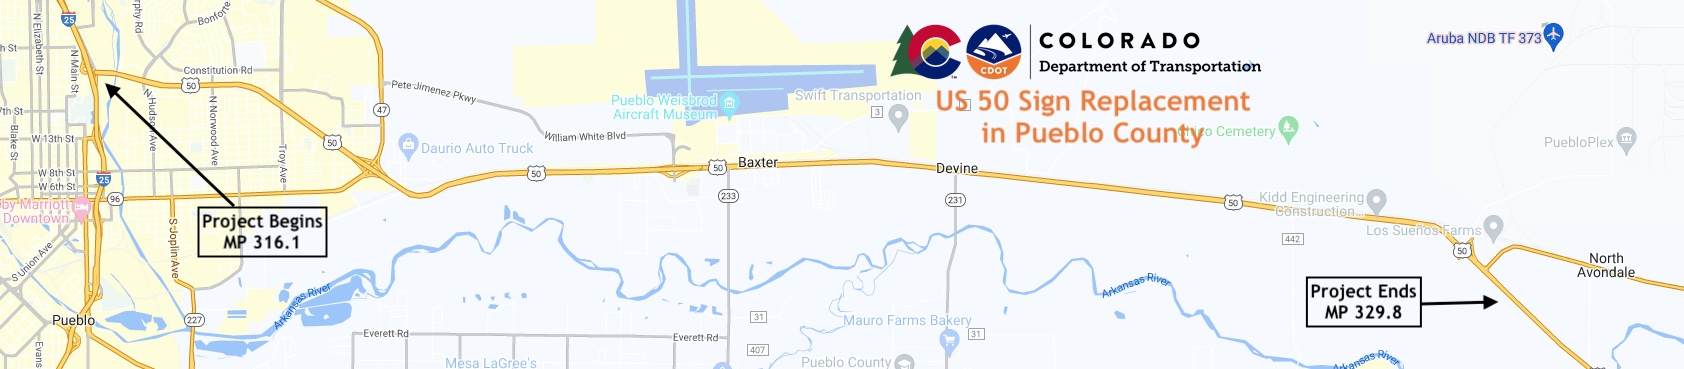 Pueblo County Map.jpg detail image